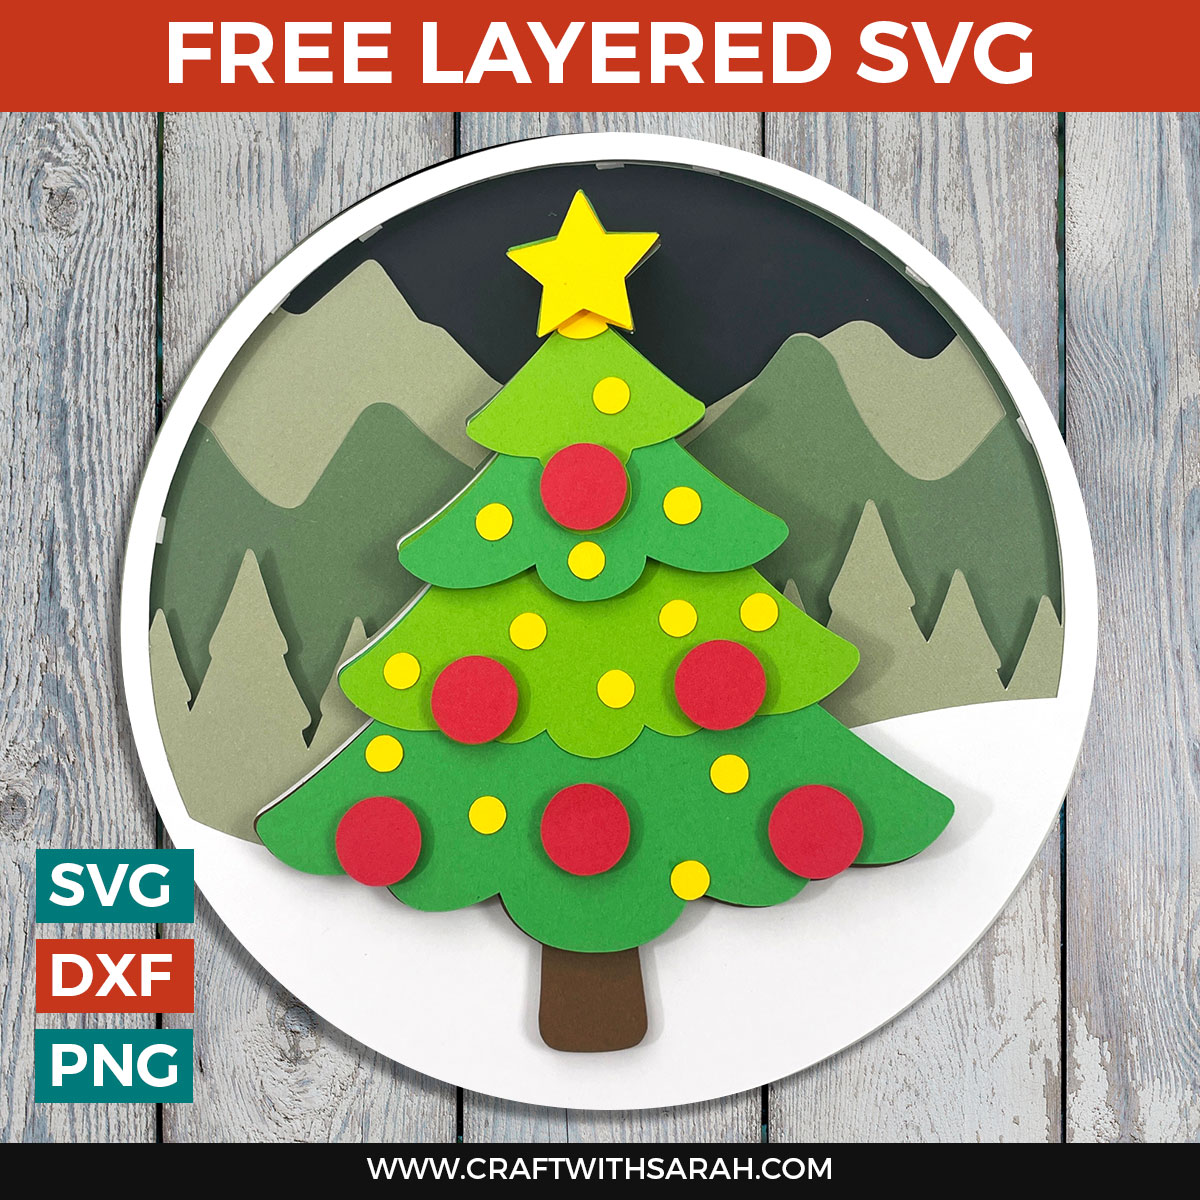 Free SVG! 🎄 Make a Whimsical Papercraft Christmas Tree